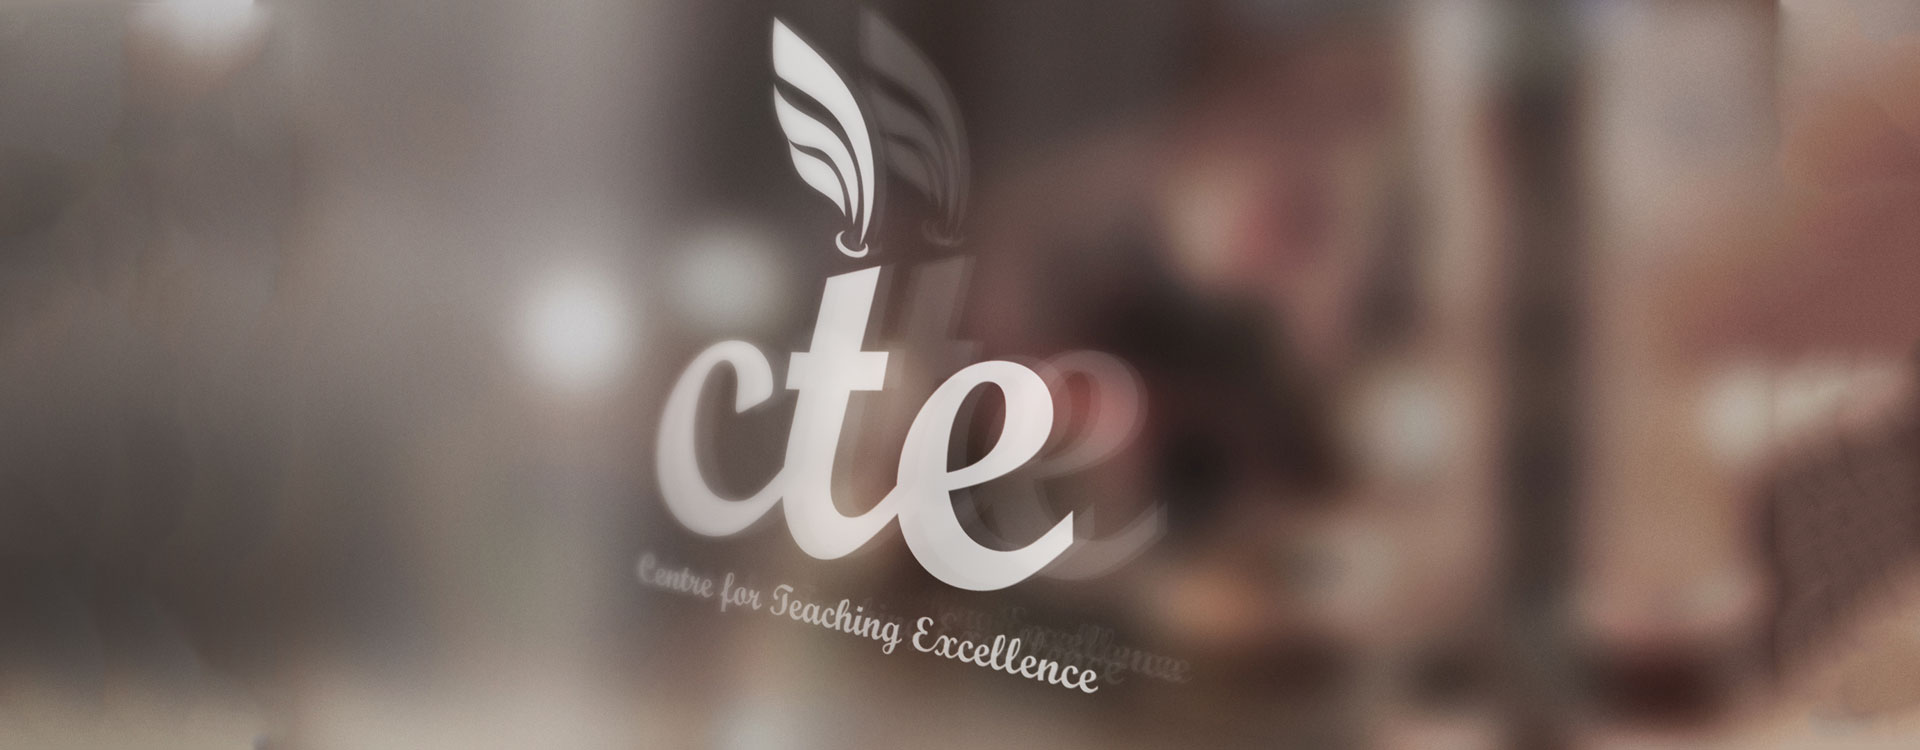 Logo design for CTE - Centre for Teaching Excellence